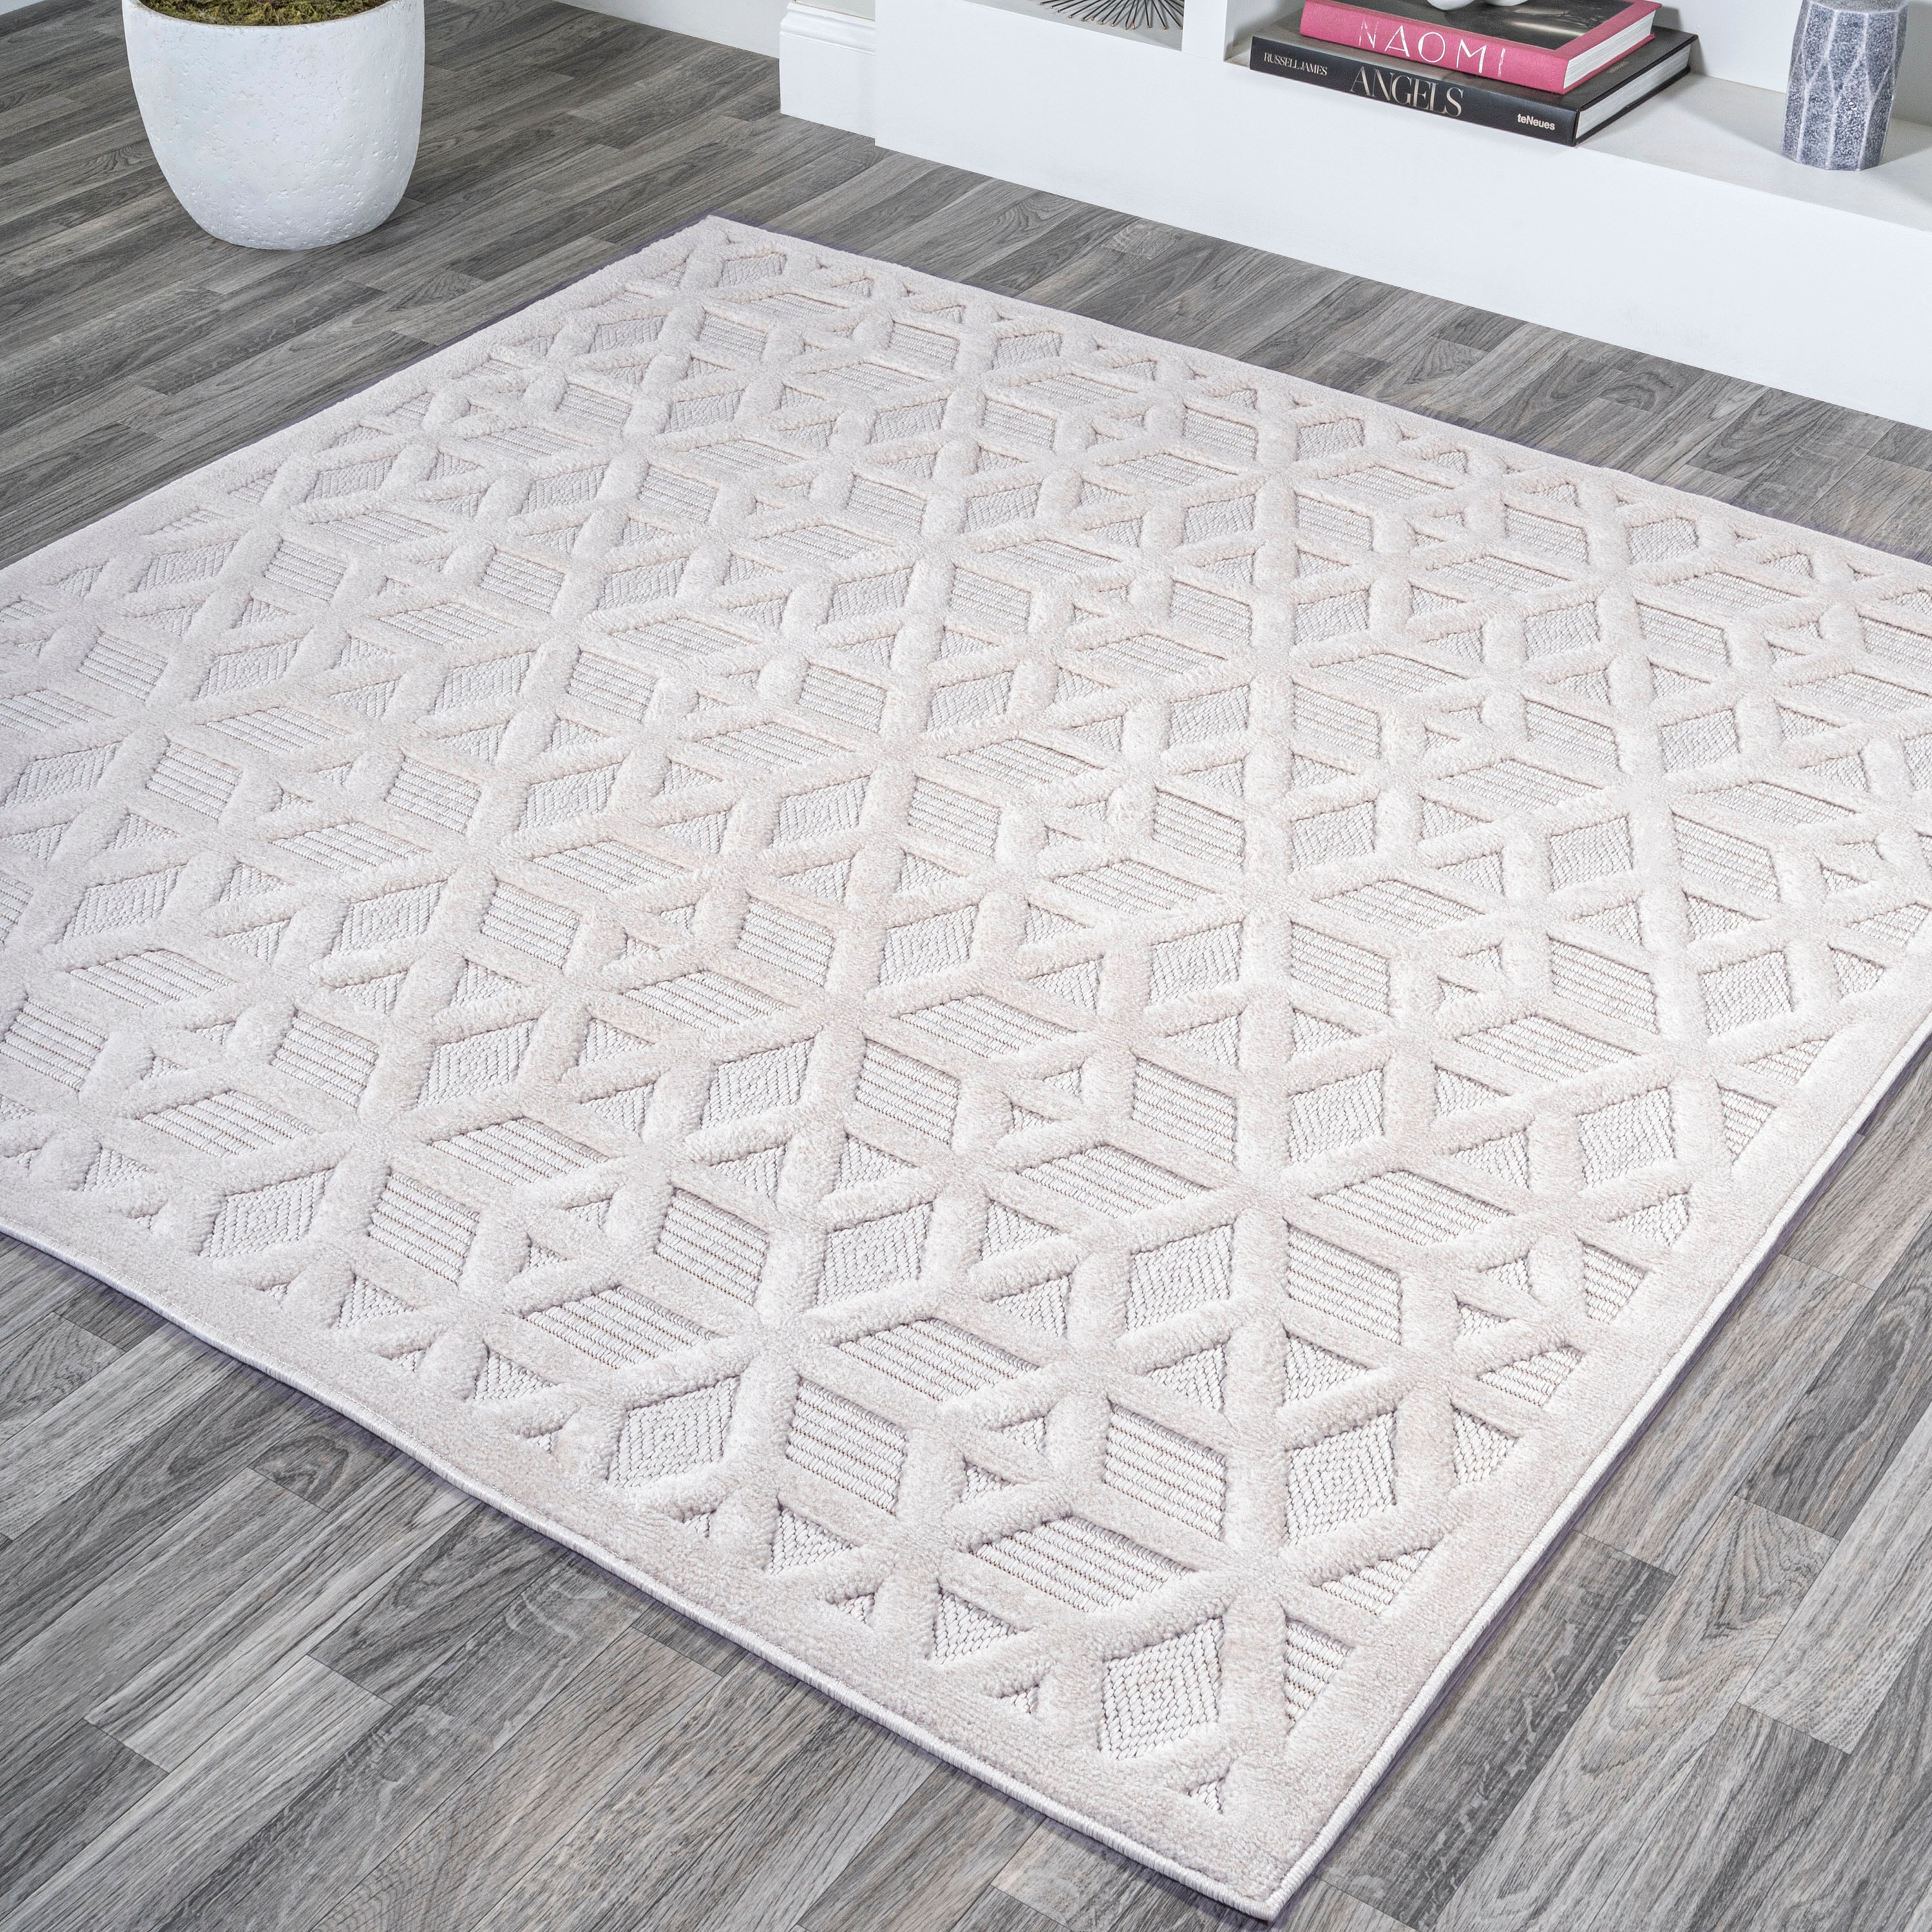 2Pcs/set Black Kitchen Floor Mat Geometric Pattern Area Rugs Carpets Doormat US 